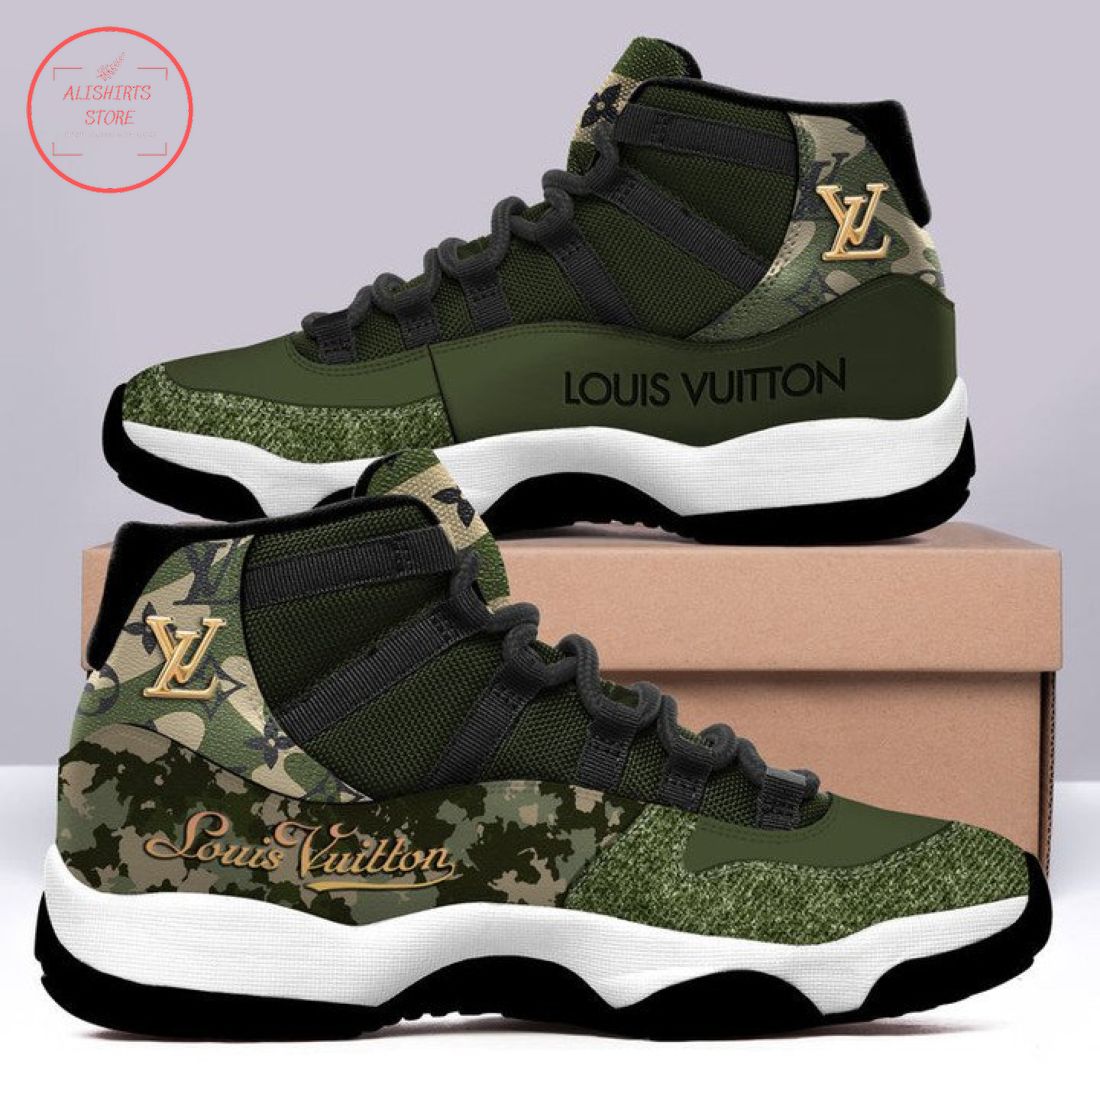 Louis Vuitton LV Camo Air Jordan 11 Sneaker Shoes